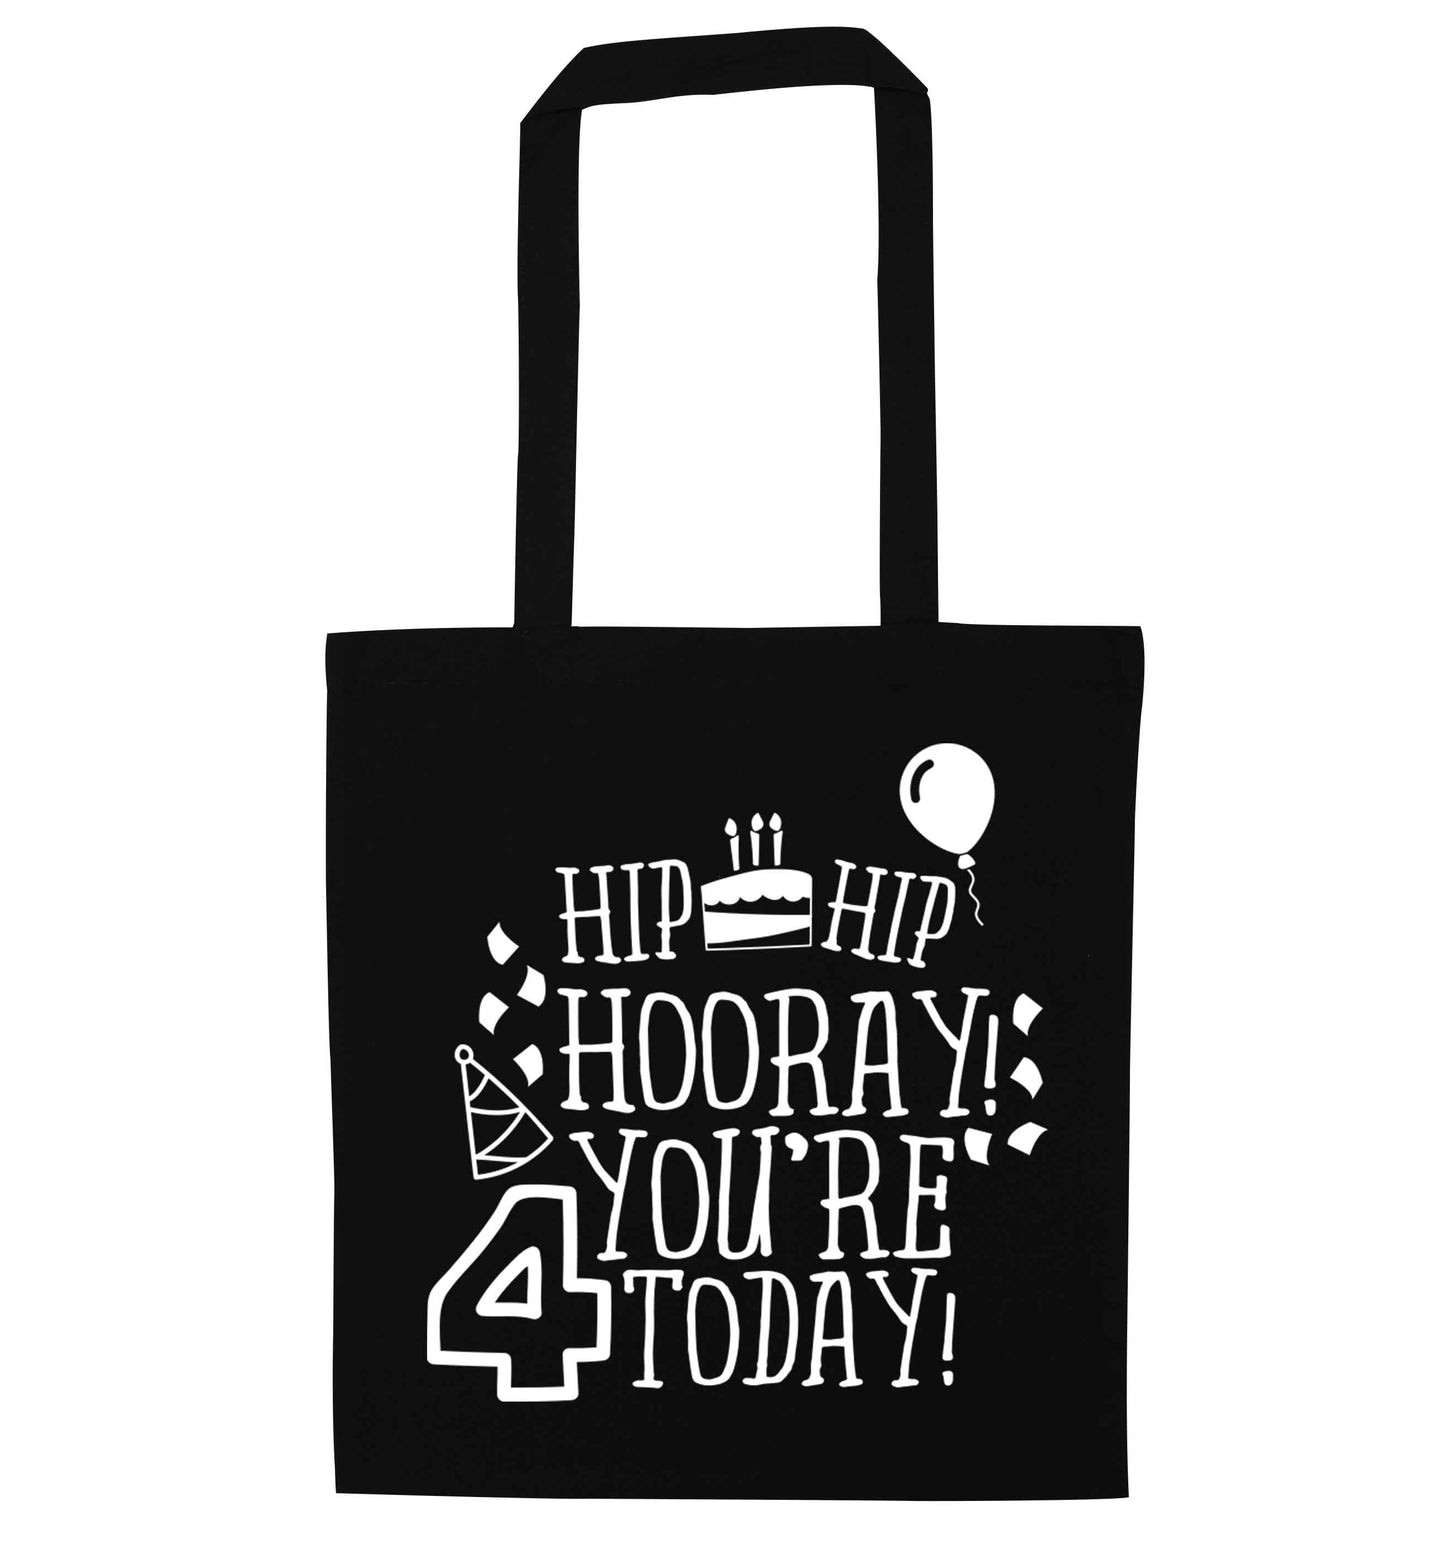 Hip hip hooray you're four today!black tote bag